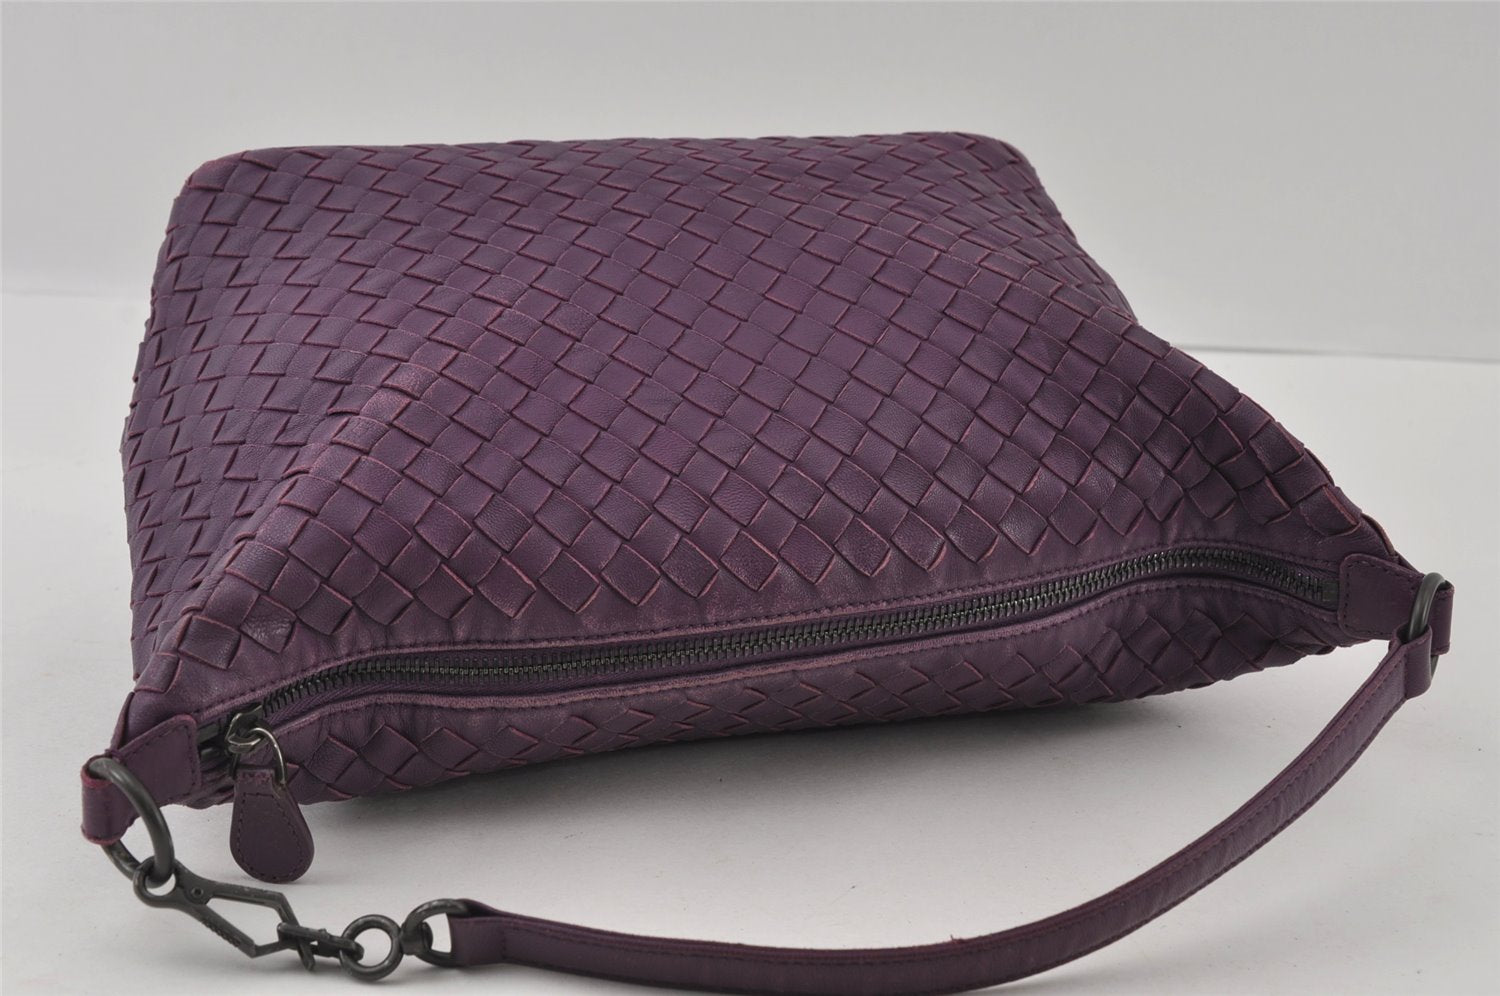 Authentic BOTTEGA VENETA Intrecciato Leather Shoulder Hand Bag Purple 4605I